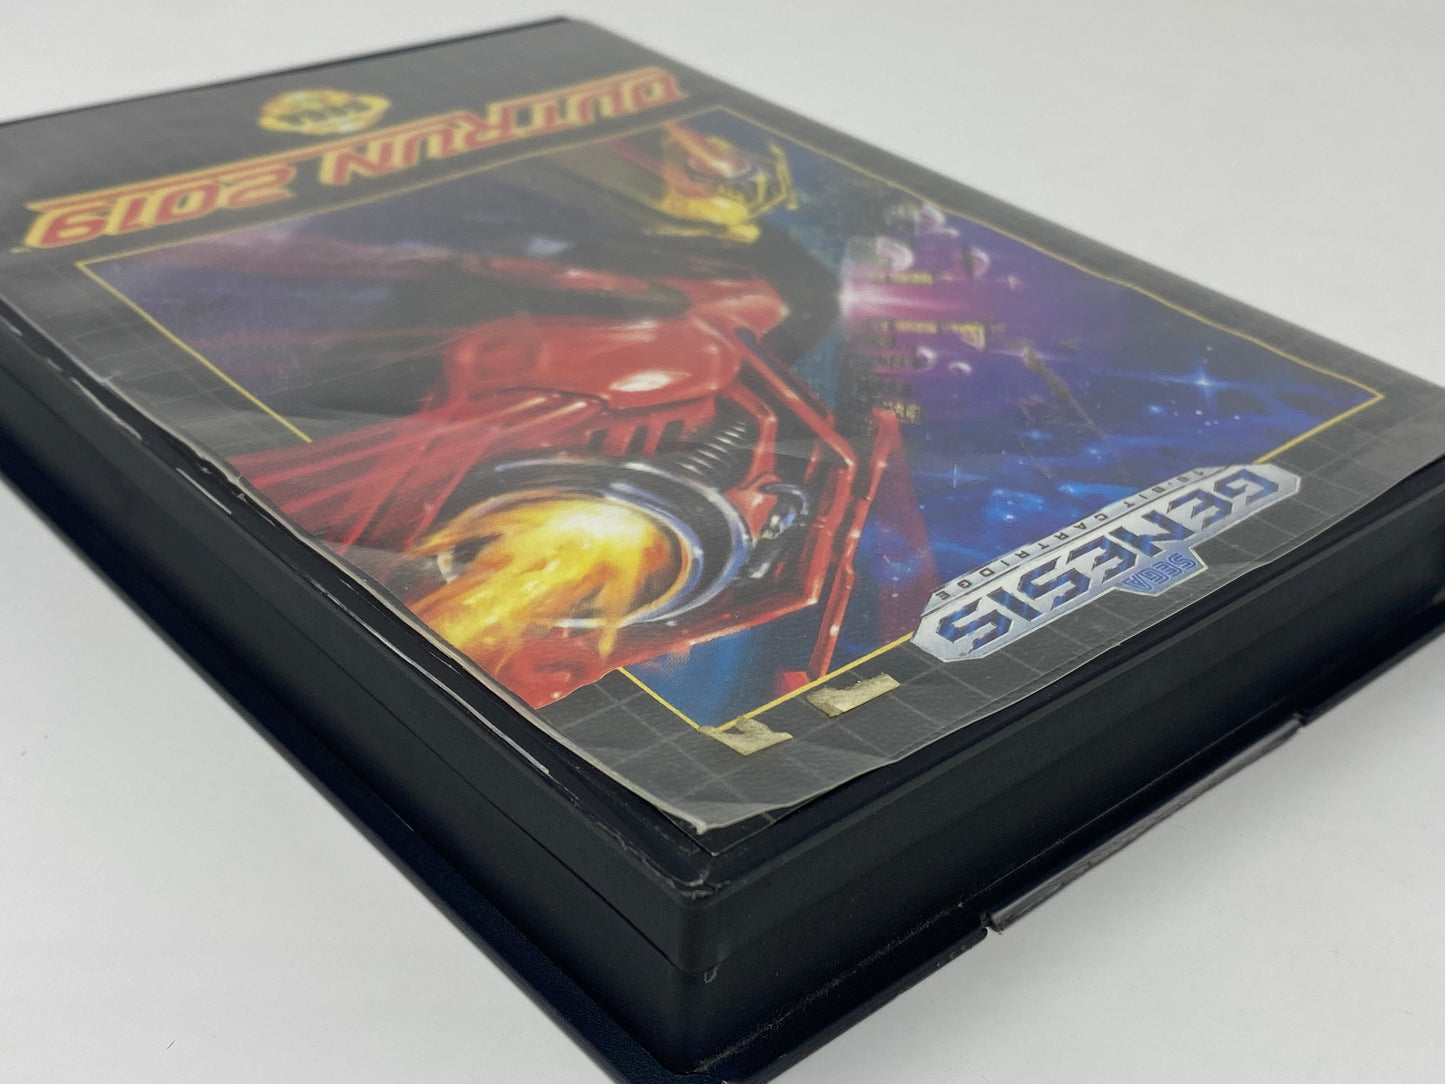 Sega Genesis - Outrun 2019 - CIB - Complete w/ Case & Instructions